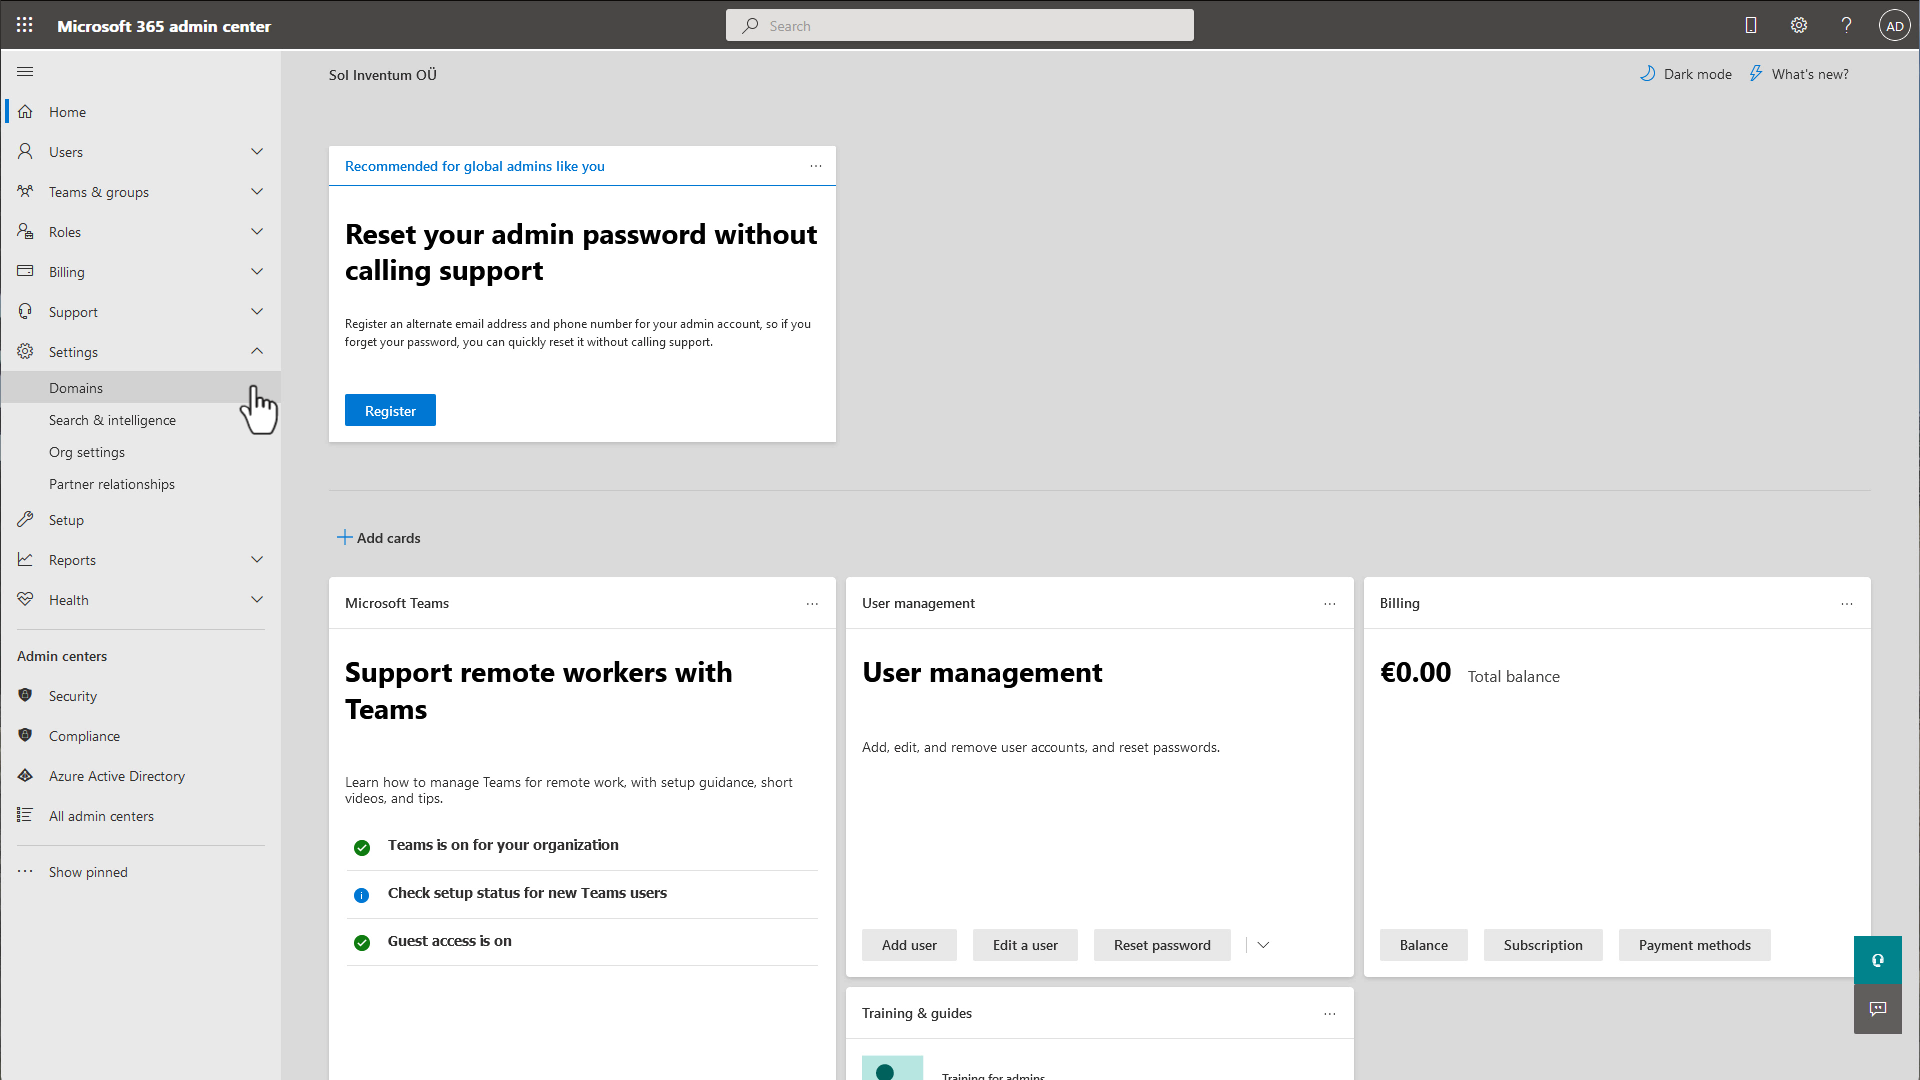 Microsoft 365 Admin Portal Expanded Navigation